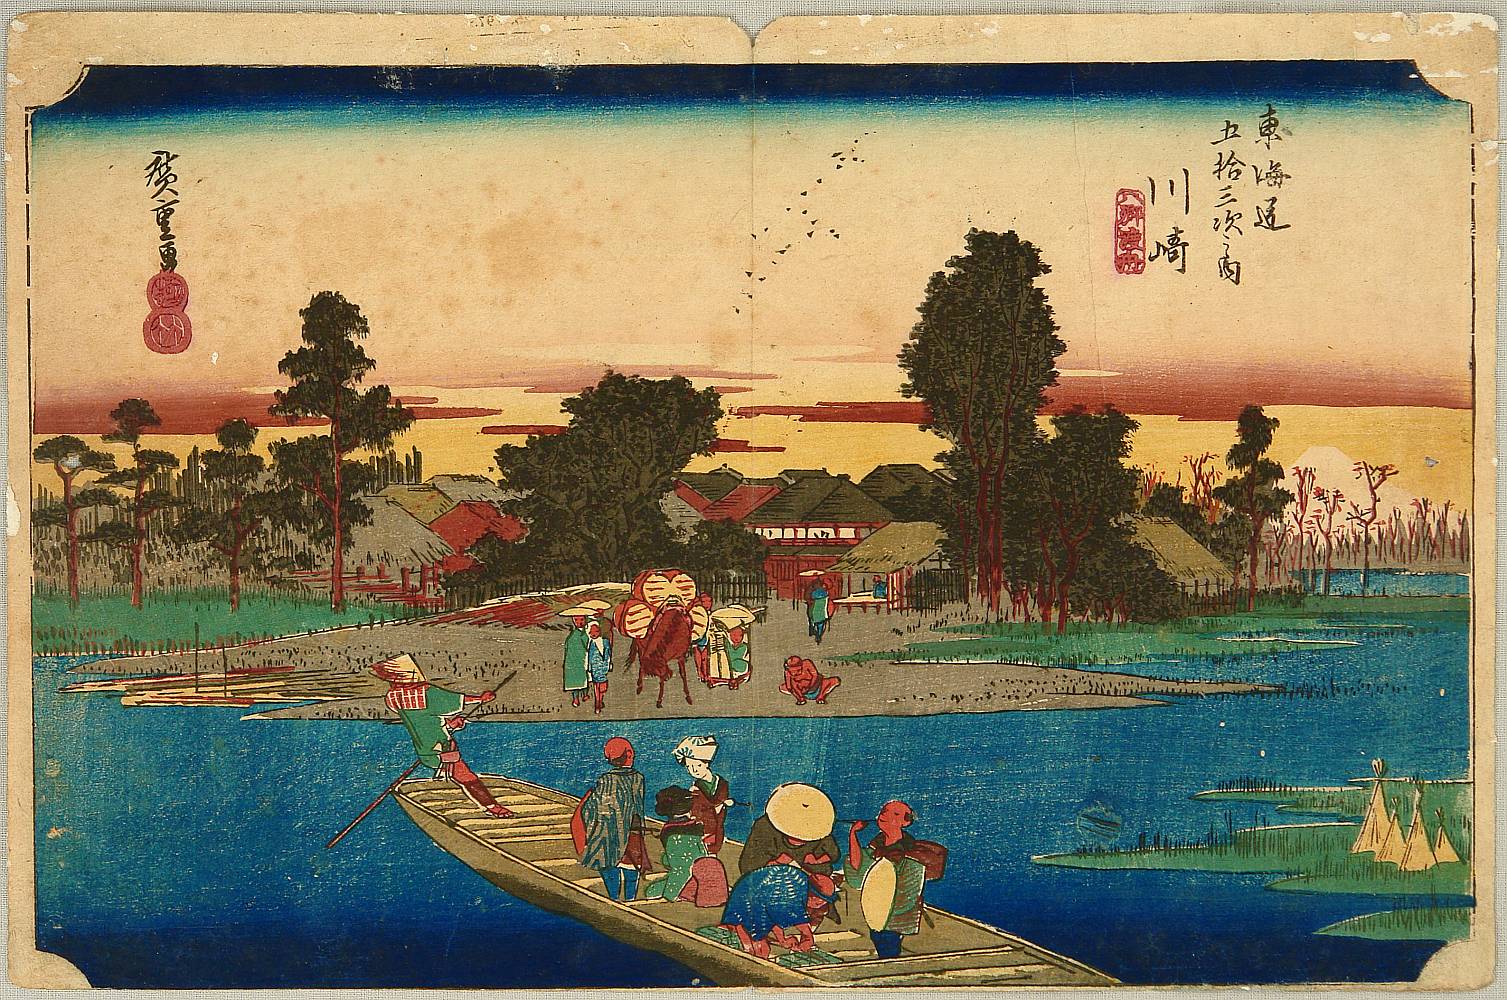 Utagawa Hiroshige: 53 Stations of the Tokaido (Hoeido) - Kawasaki 